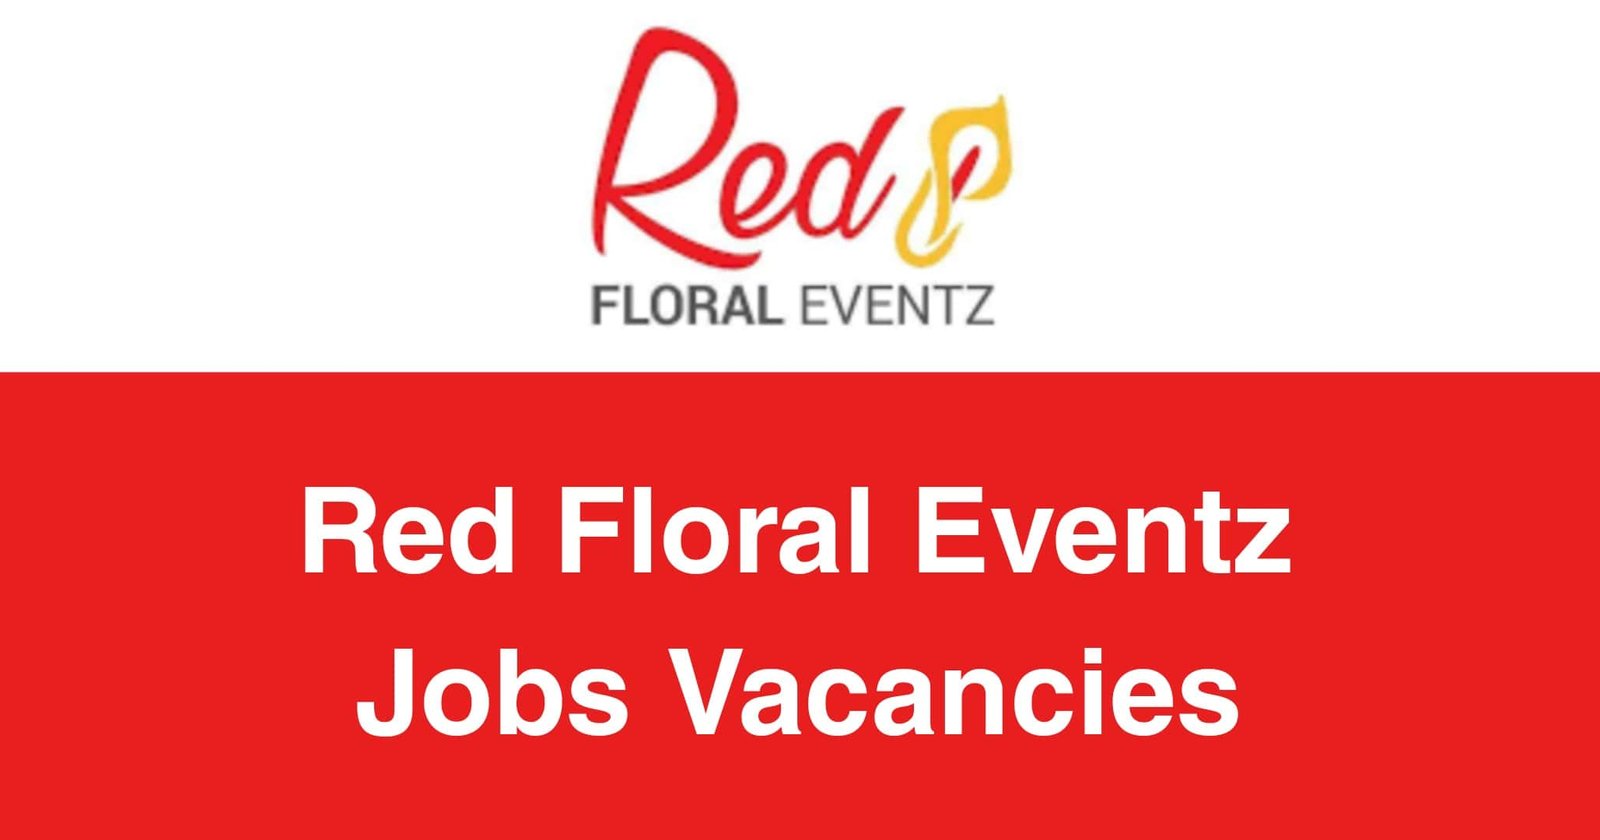 Red Floral Eventz Jobs Vacancies